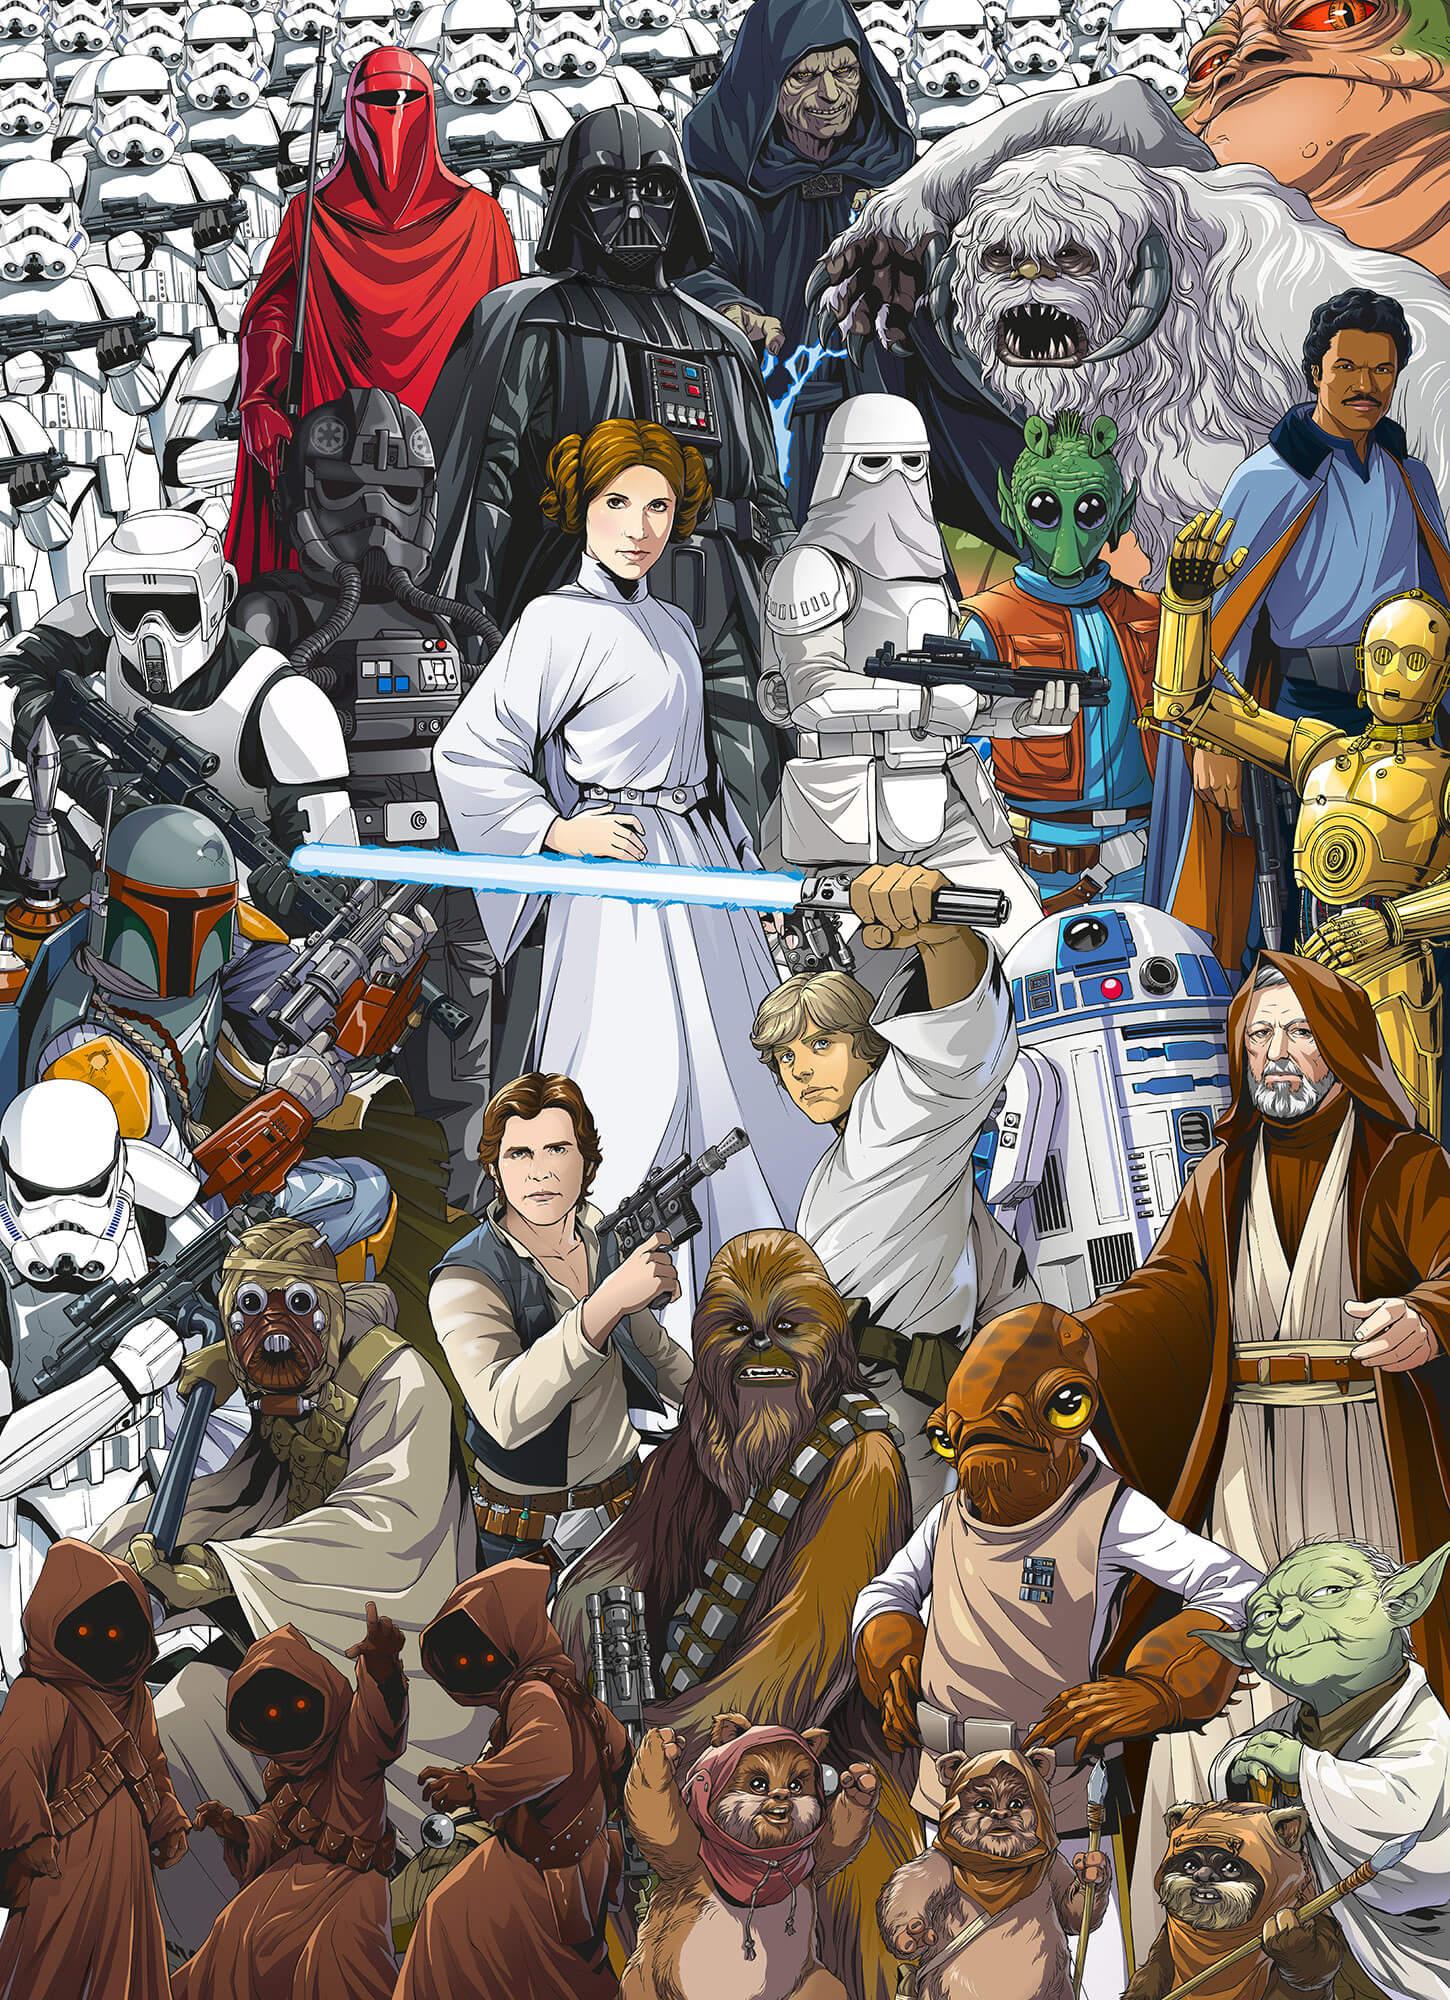 Star Wars Retro collage wall mural wallpaper